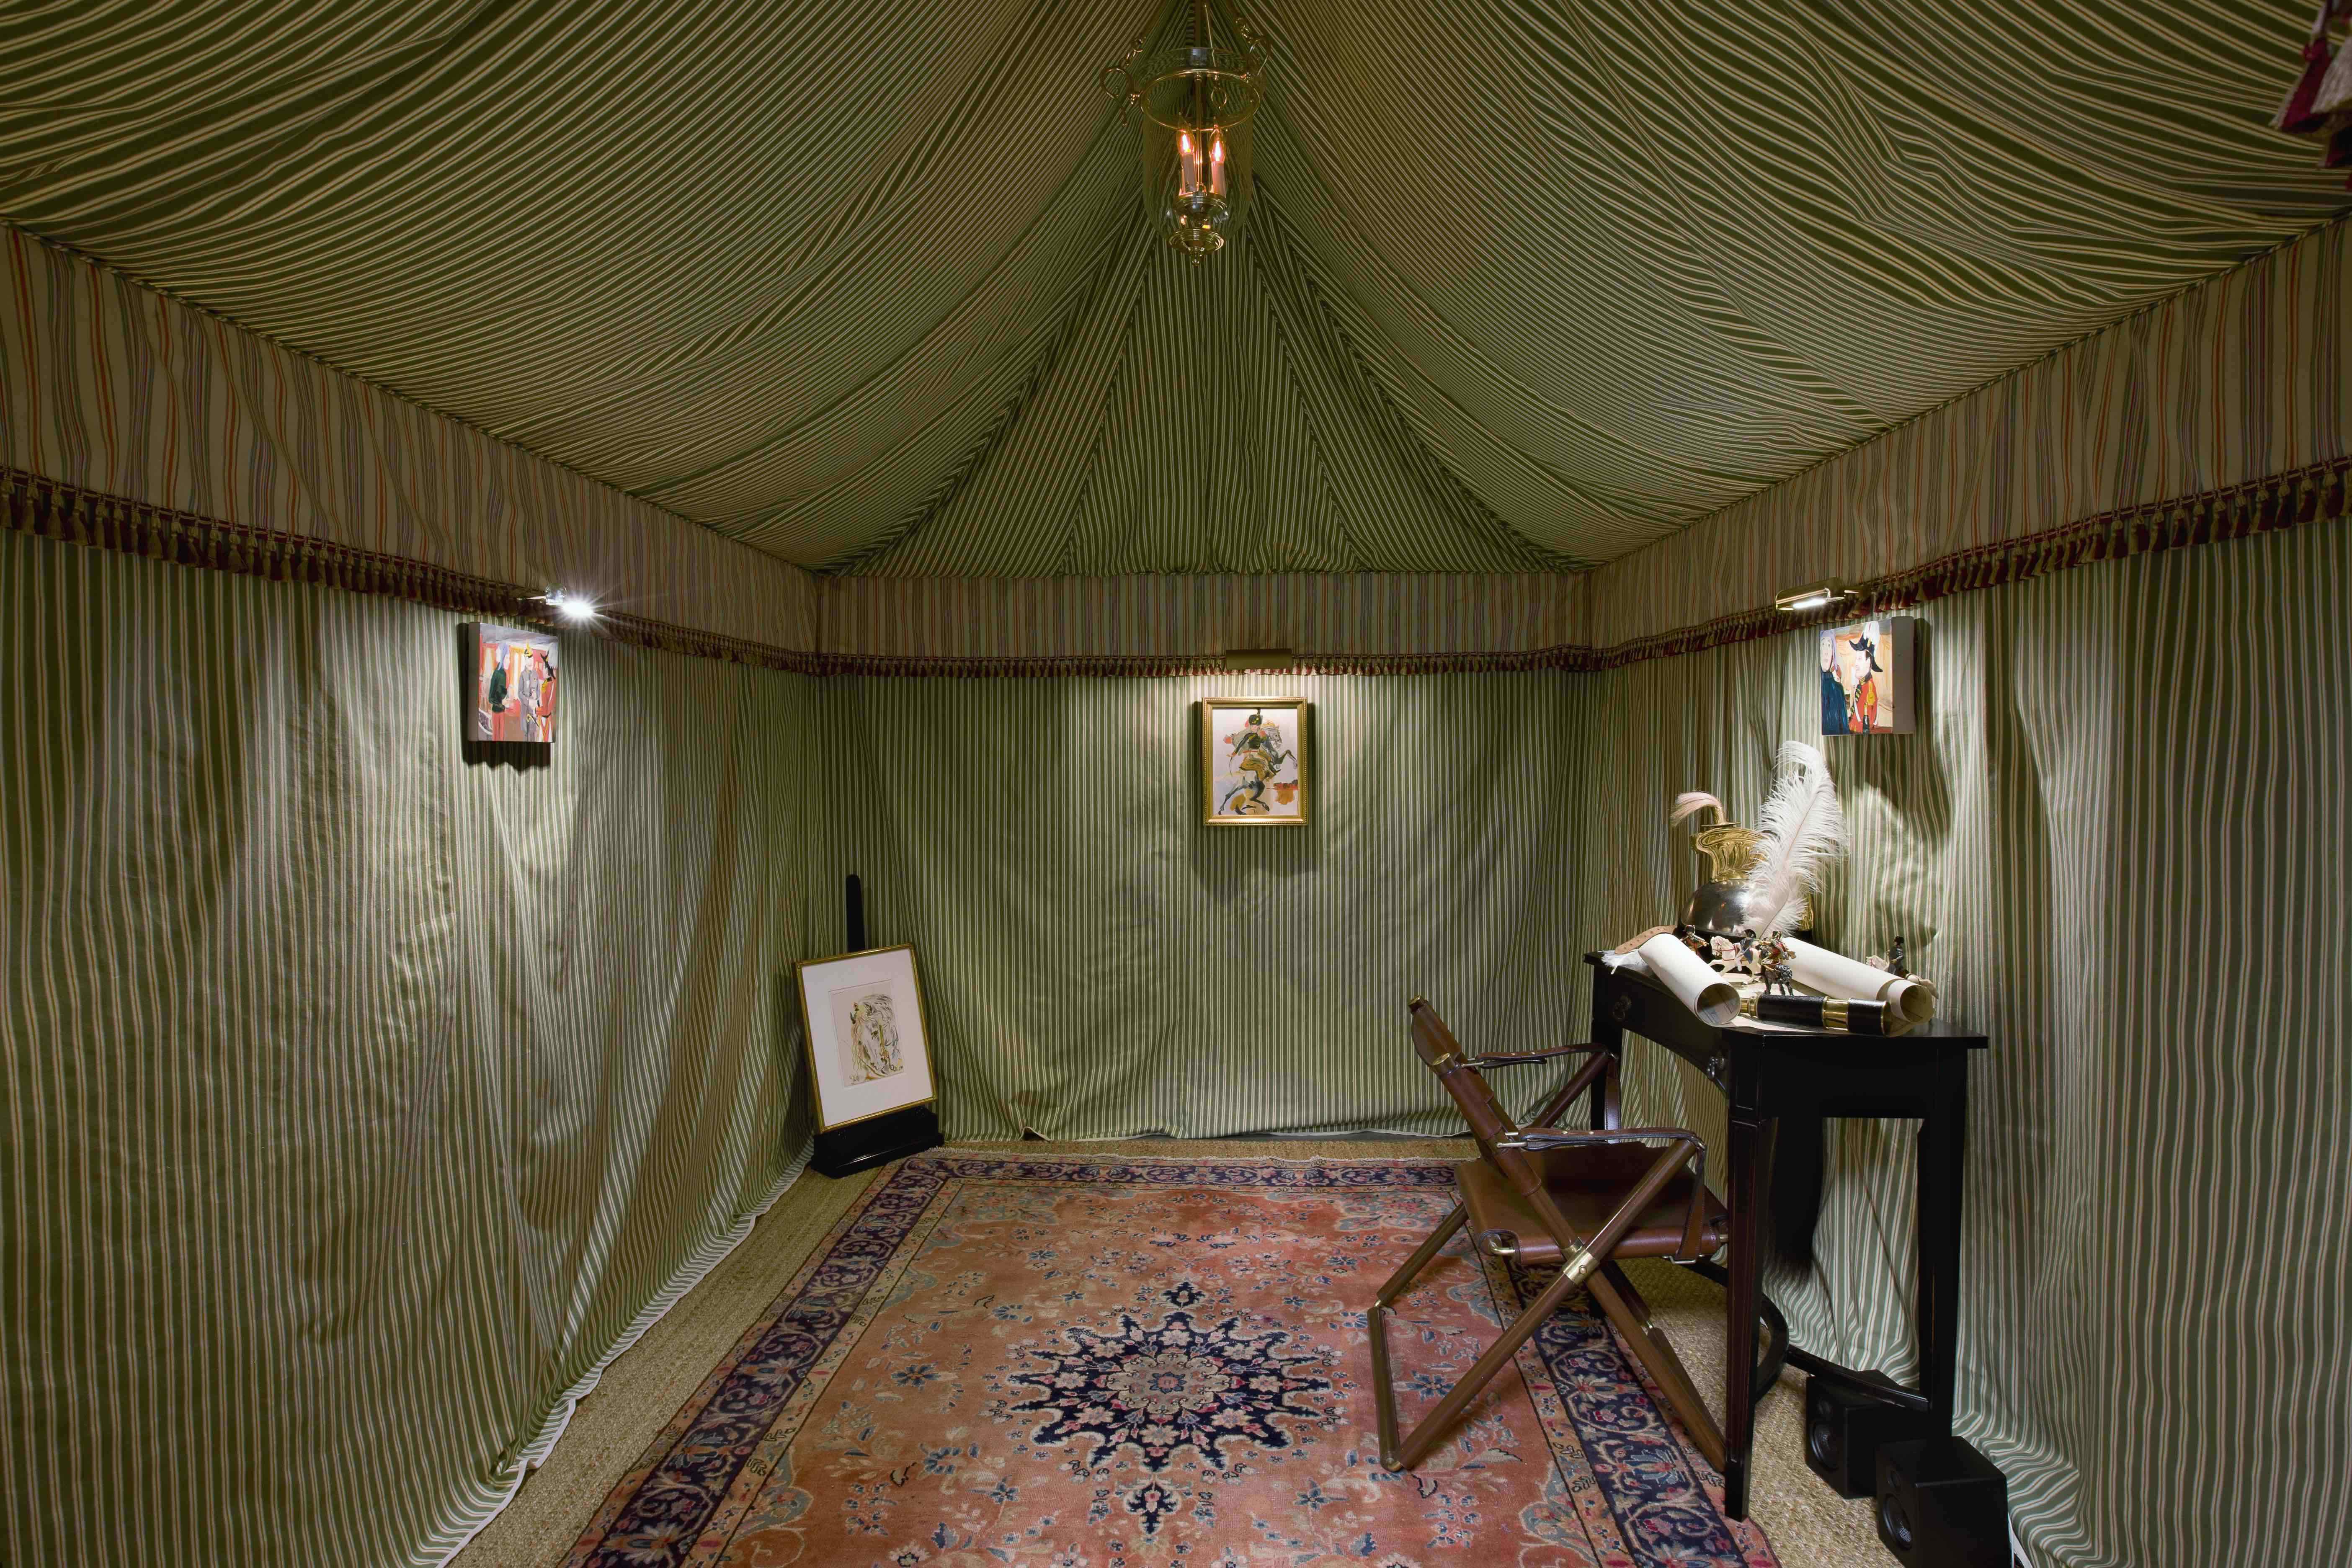 Installation view, the debonair general's fancy tent, 2012